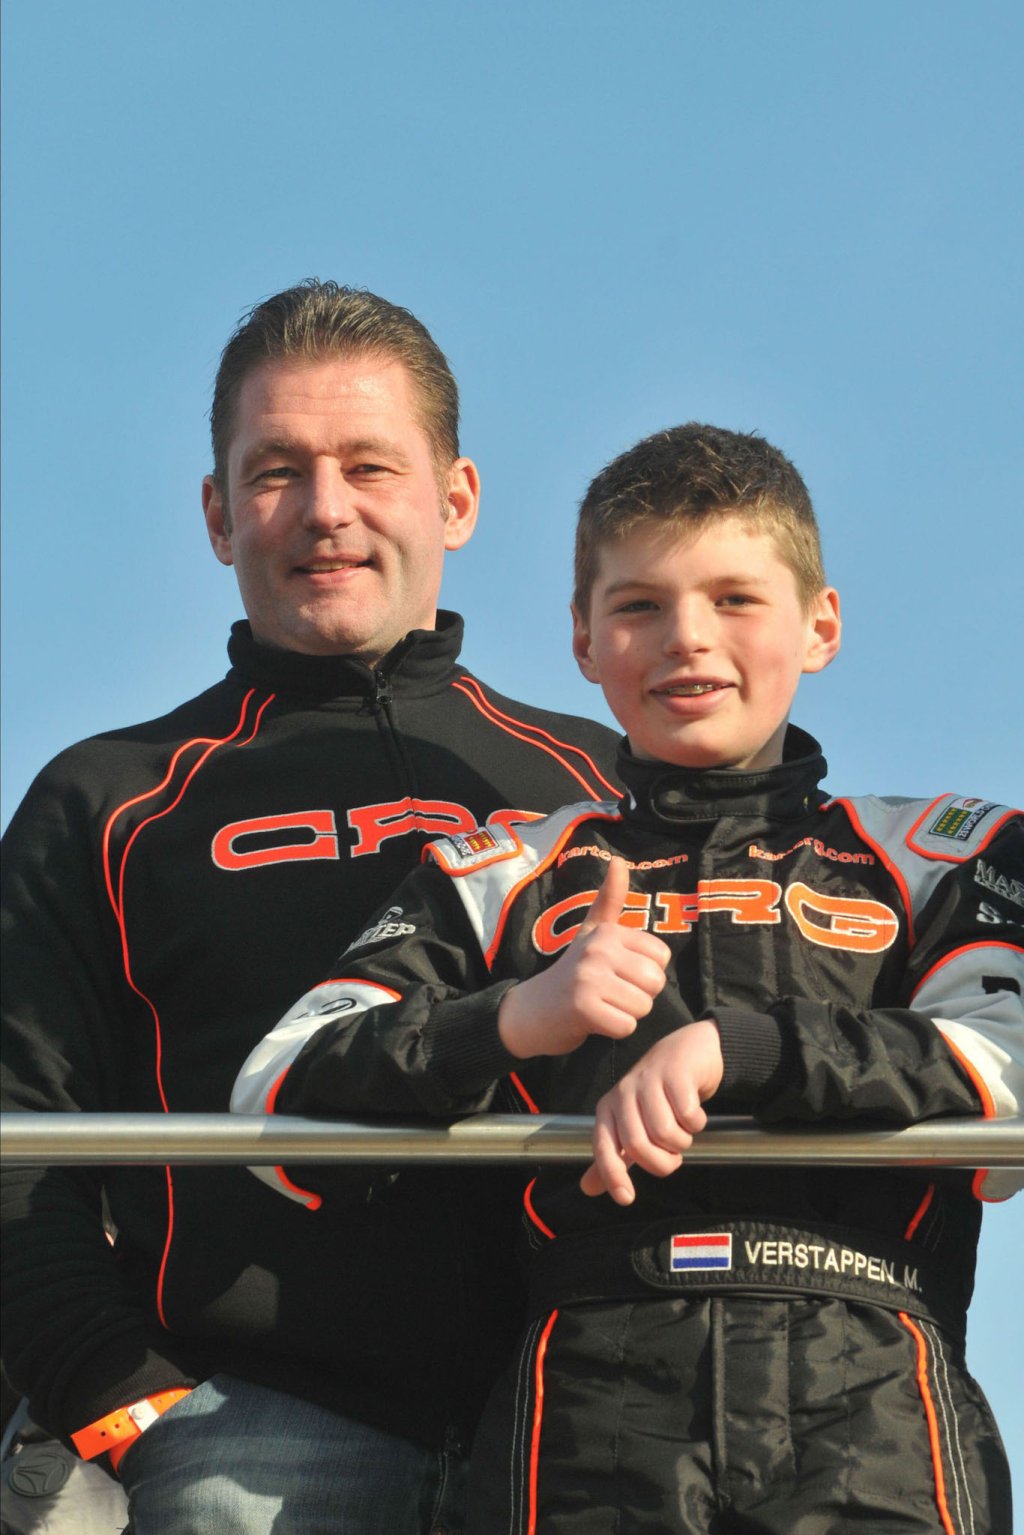 Jos and Max Verstappen, during Max's junior international karting career.